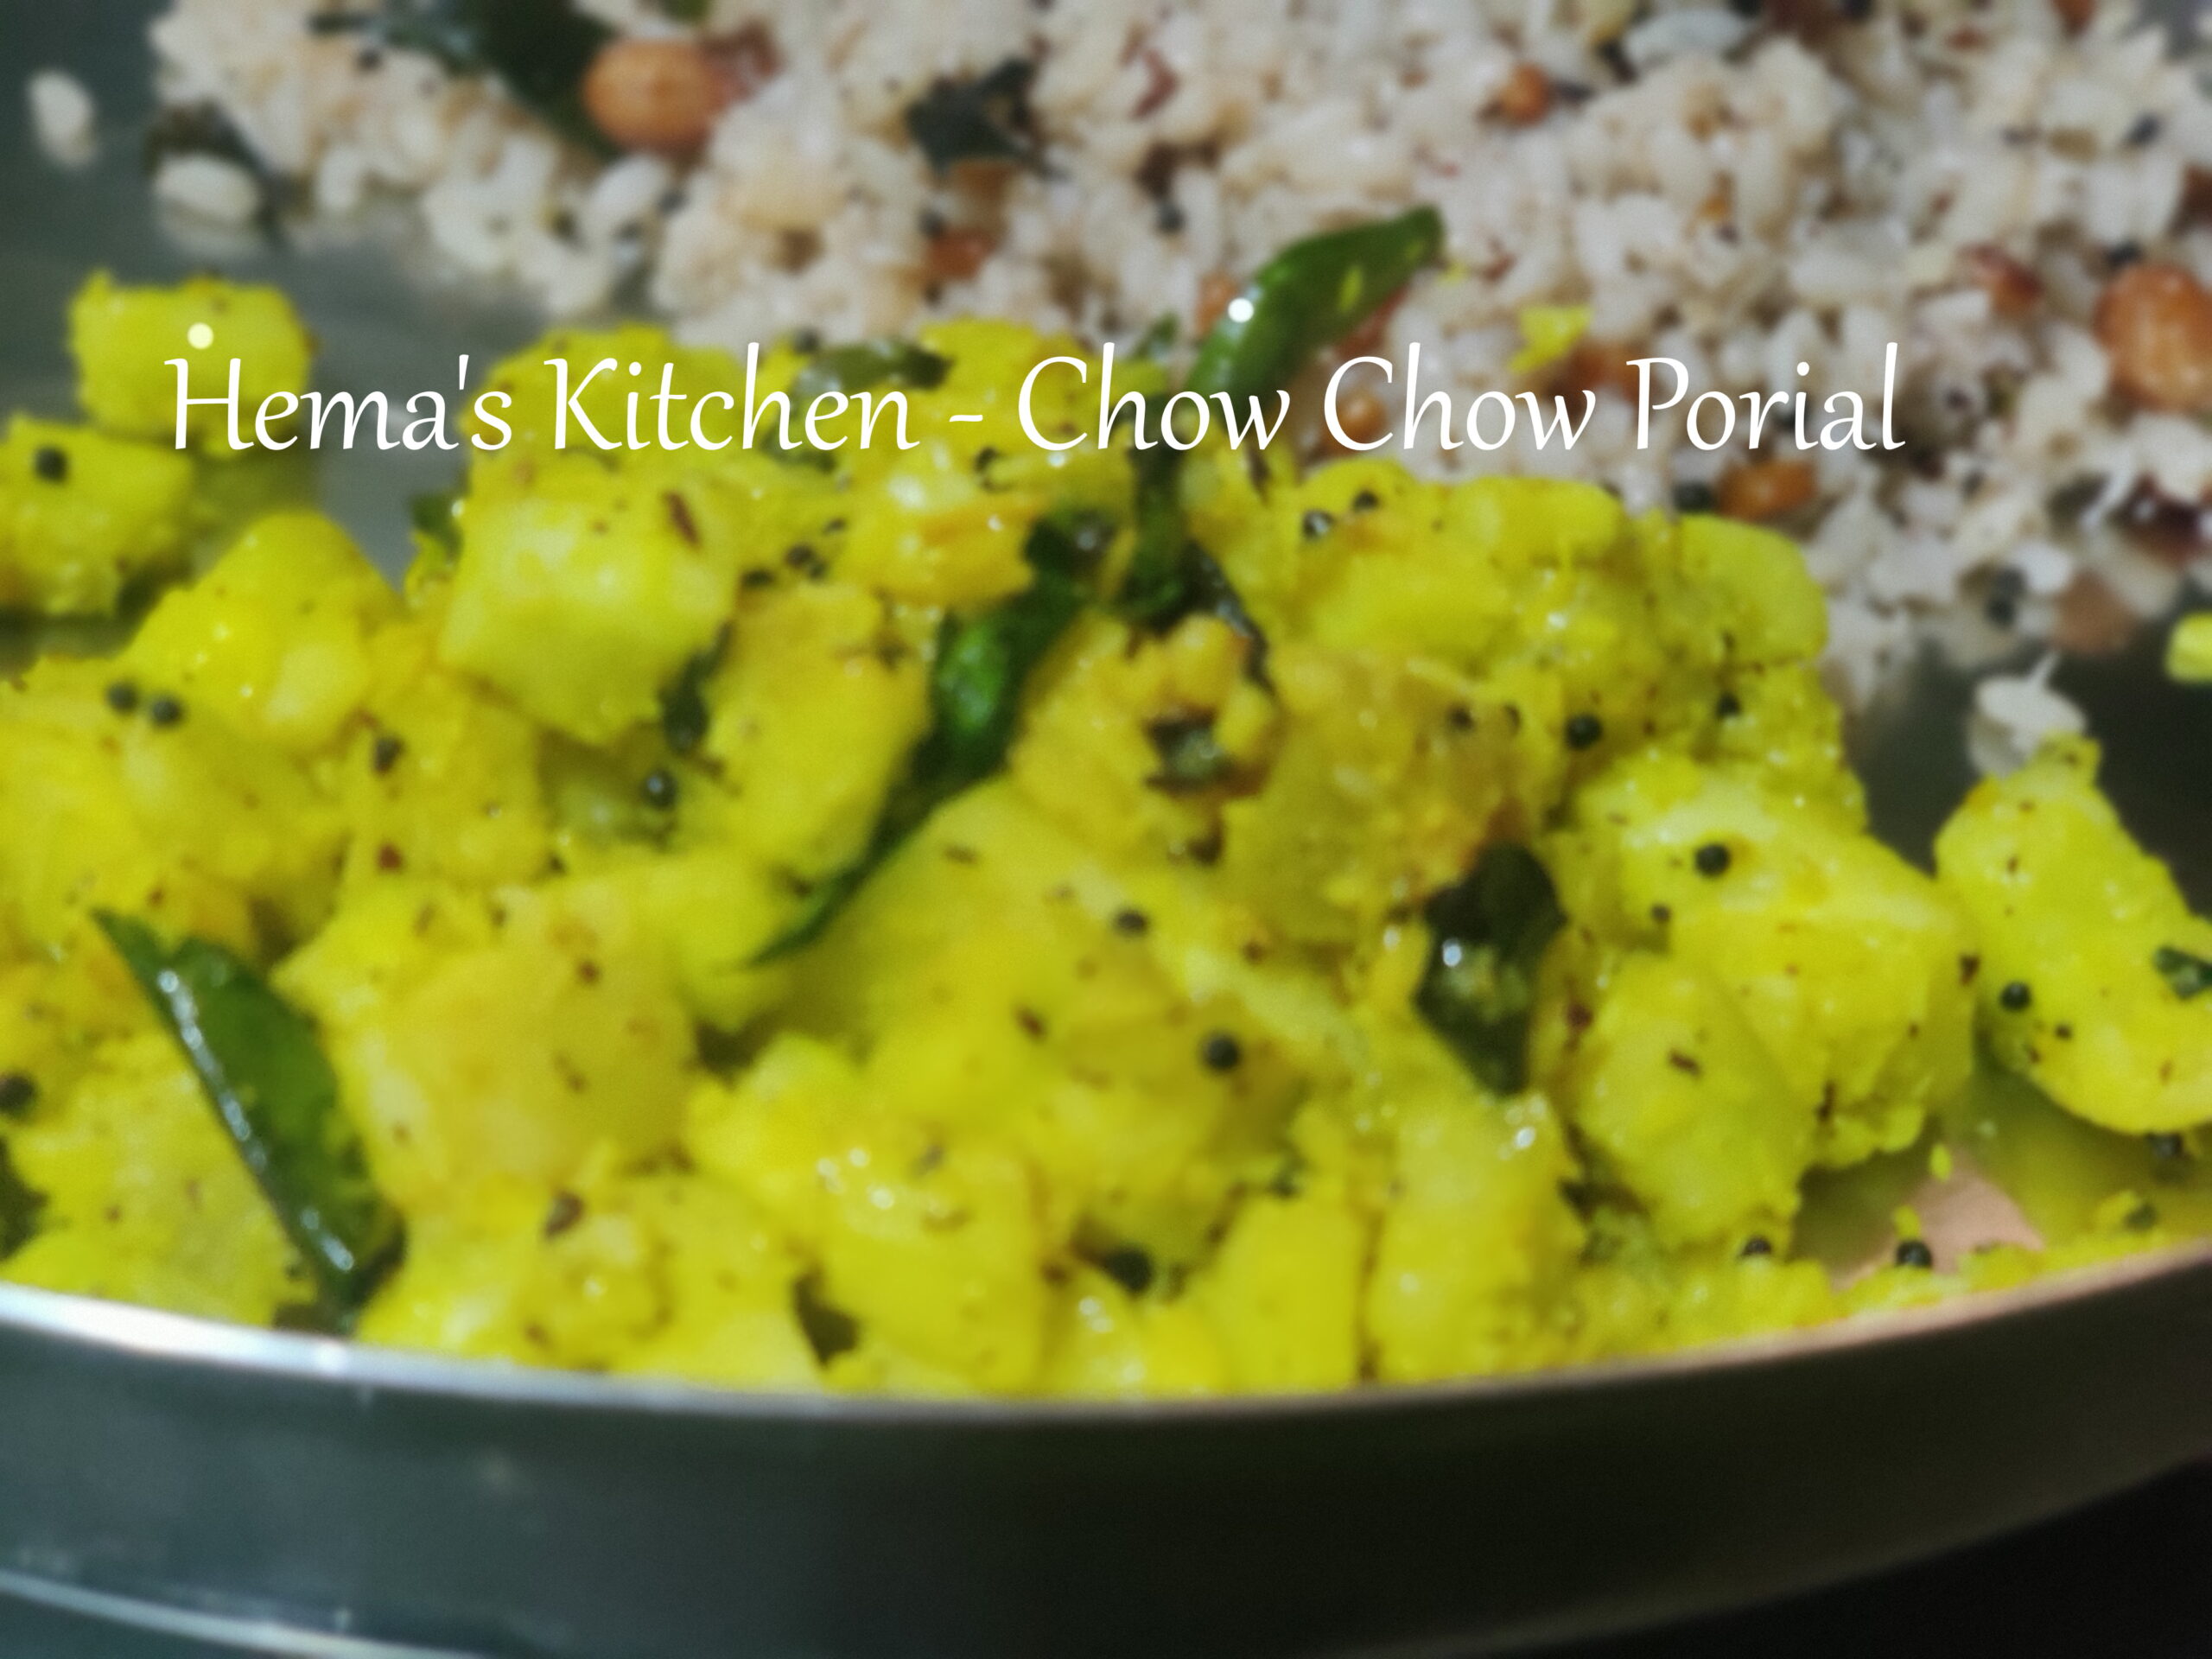 Chow Chow Porial